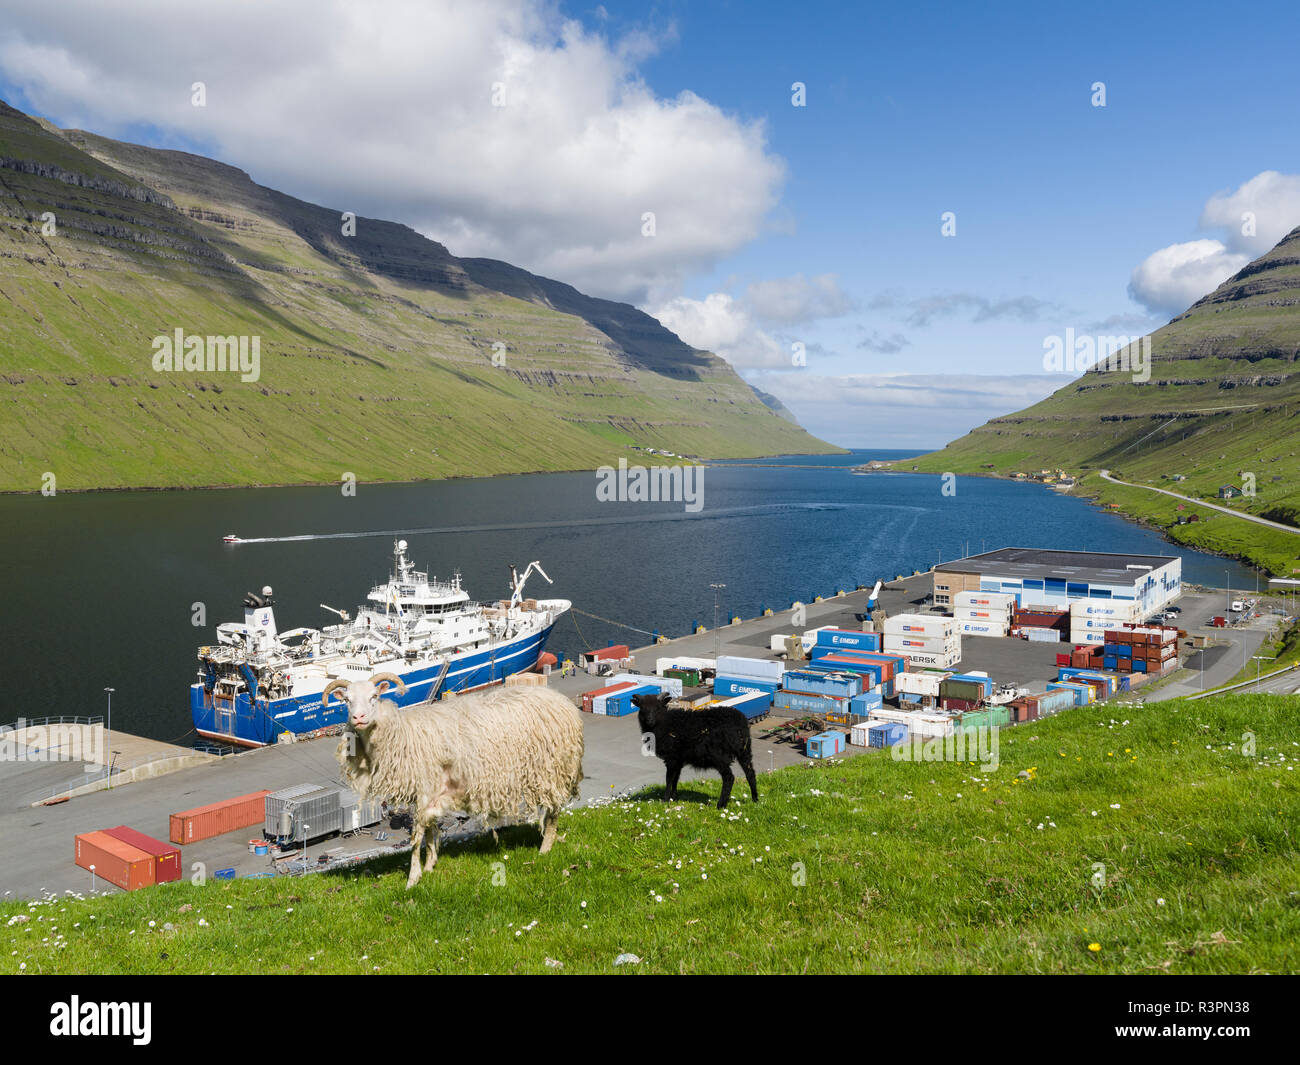 Container harbor in Klaksvik, the capital of the Northern Isles on the isle of Bordoy Nordoyggjar, Faroe Islands, Denmark Stock Photo